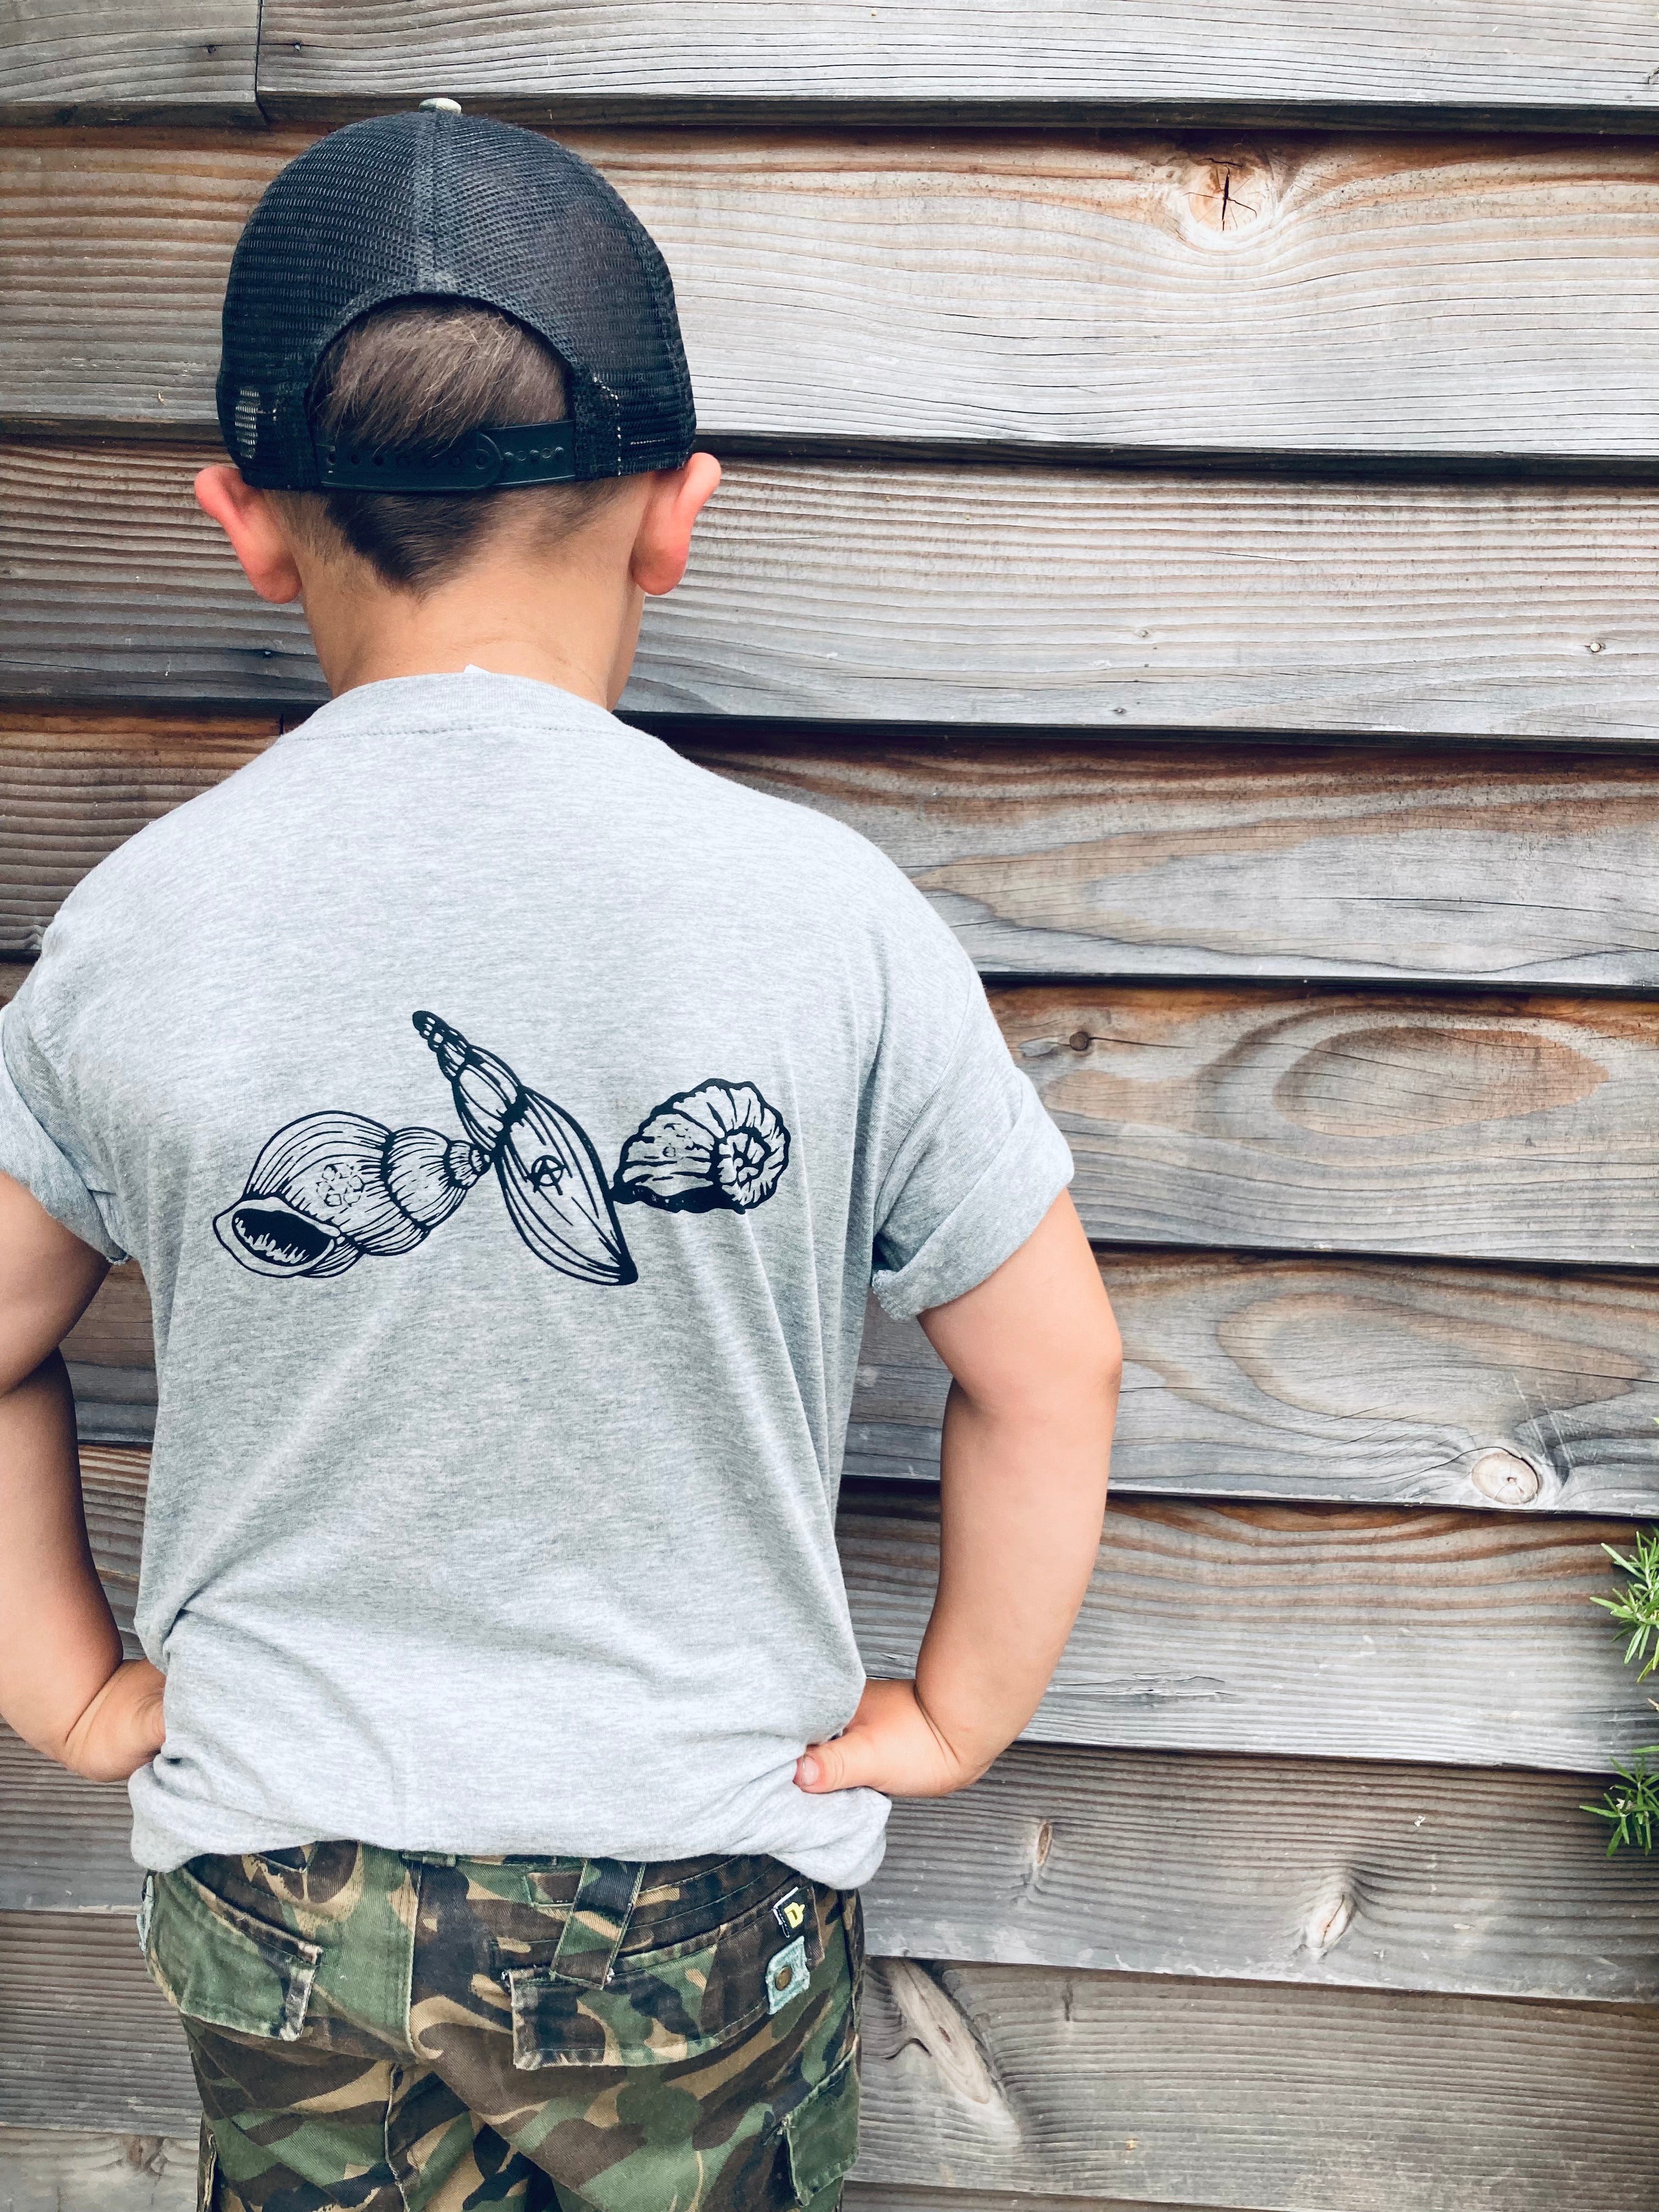 Adapt and Overcome Hermit Crab T-shirt ~ Children- Adult